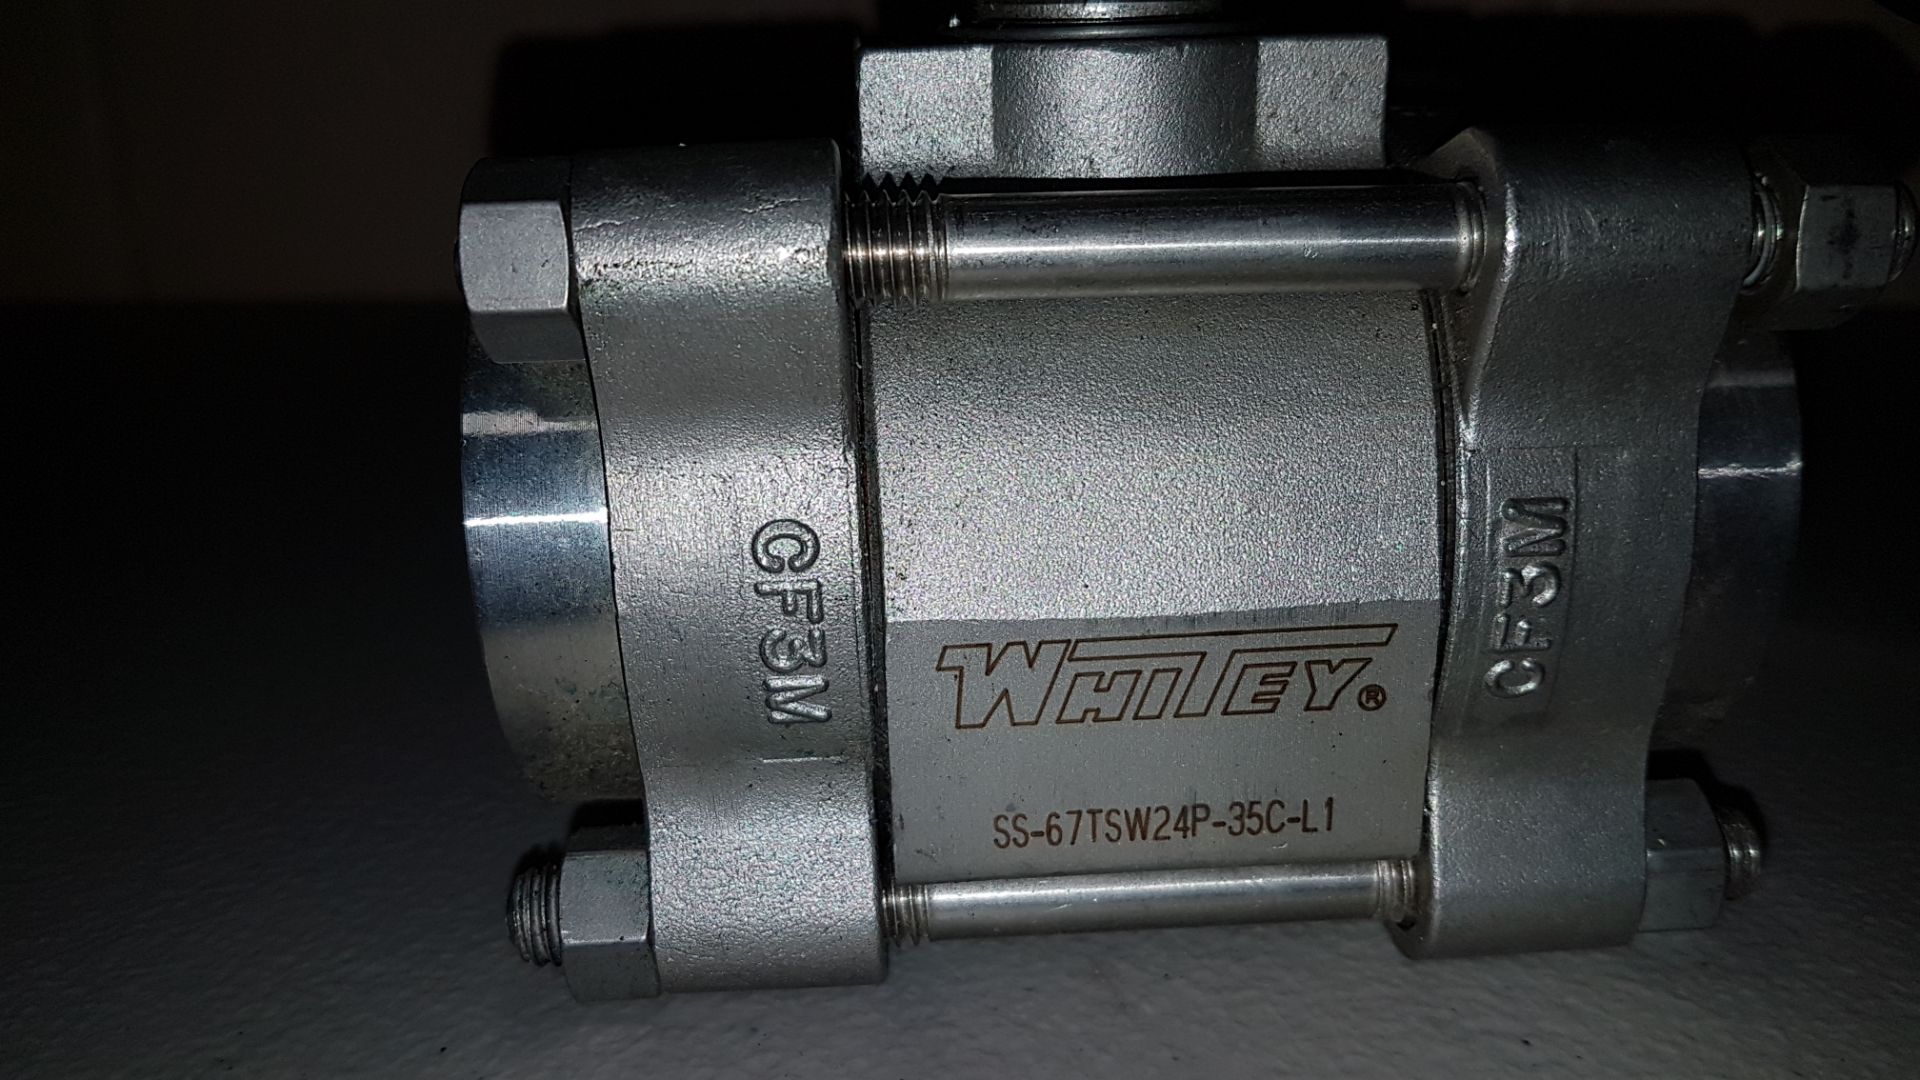 Lot of (2) stainless steel ball valves, 1.25" Whitey ball valve, and 0.5" SVT 3-way ball valve. - Image 2 of 11